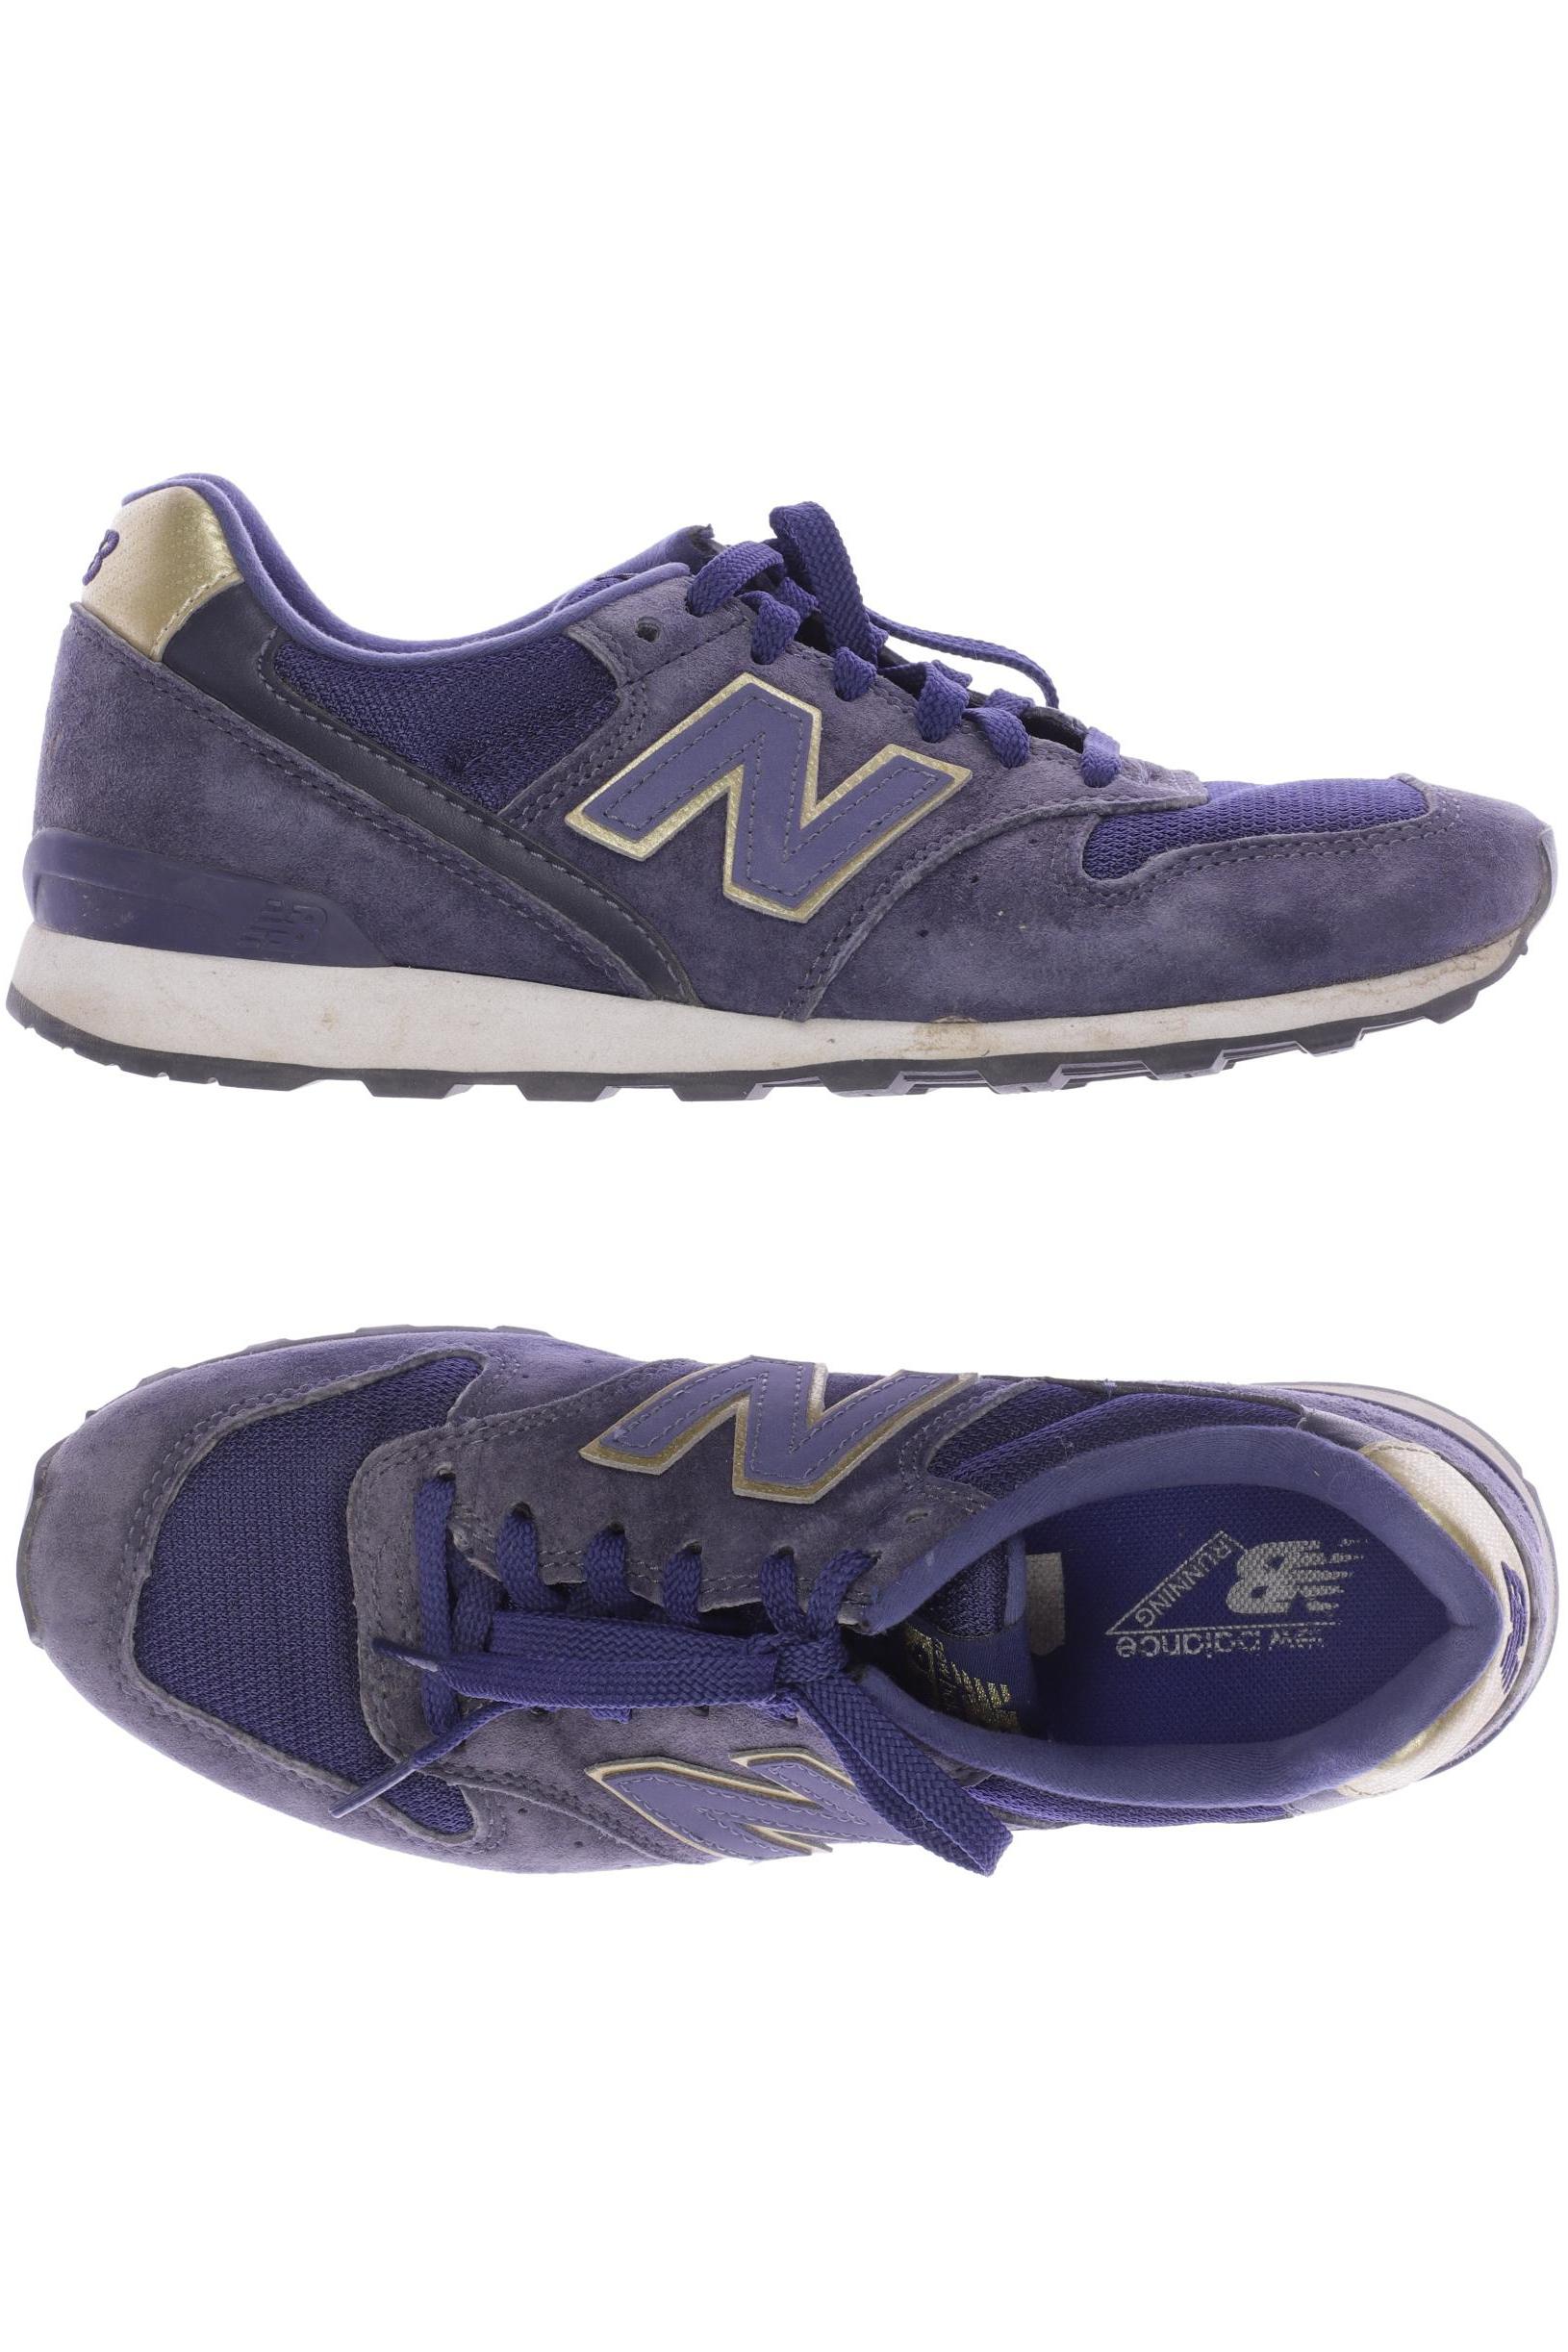 New Balance Damen Sneakers, blau von New Balance